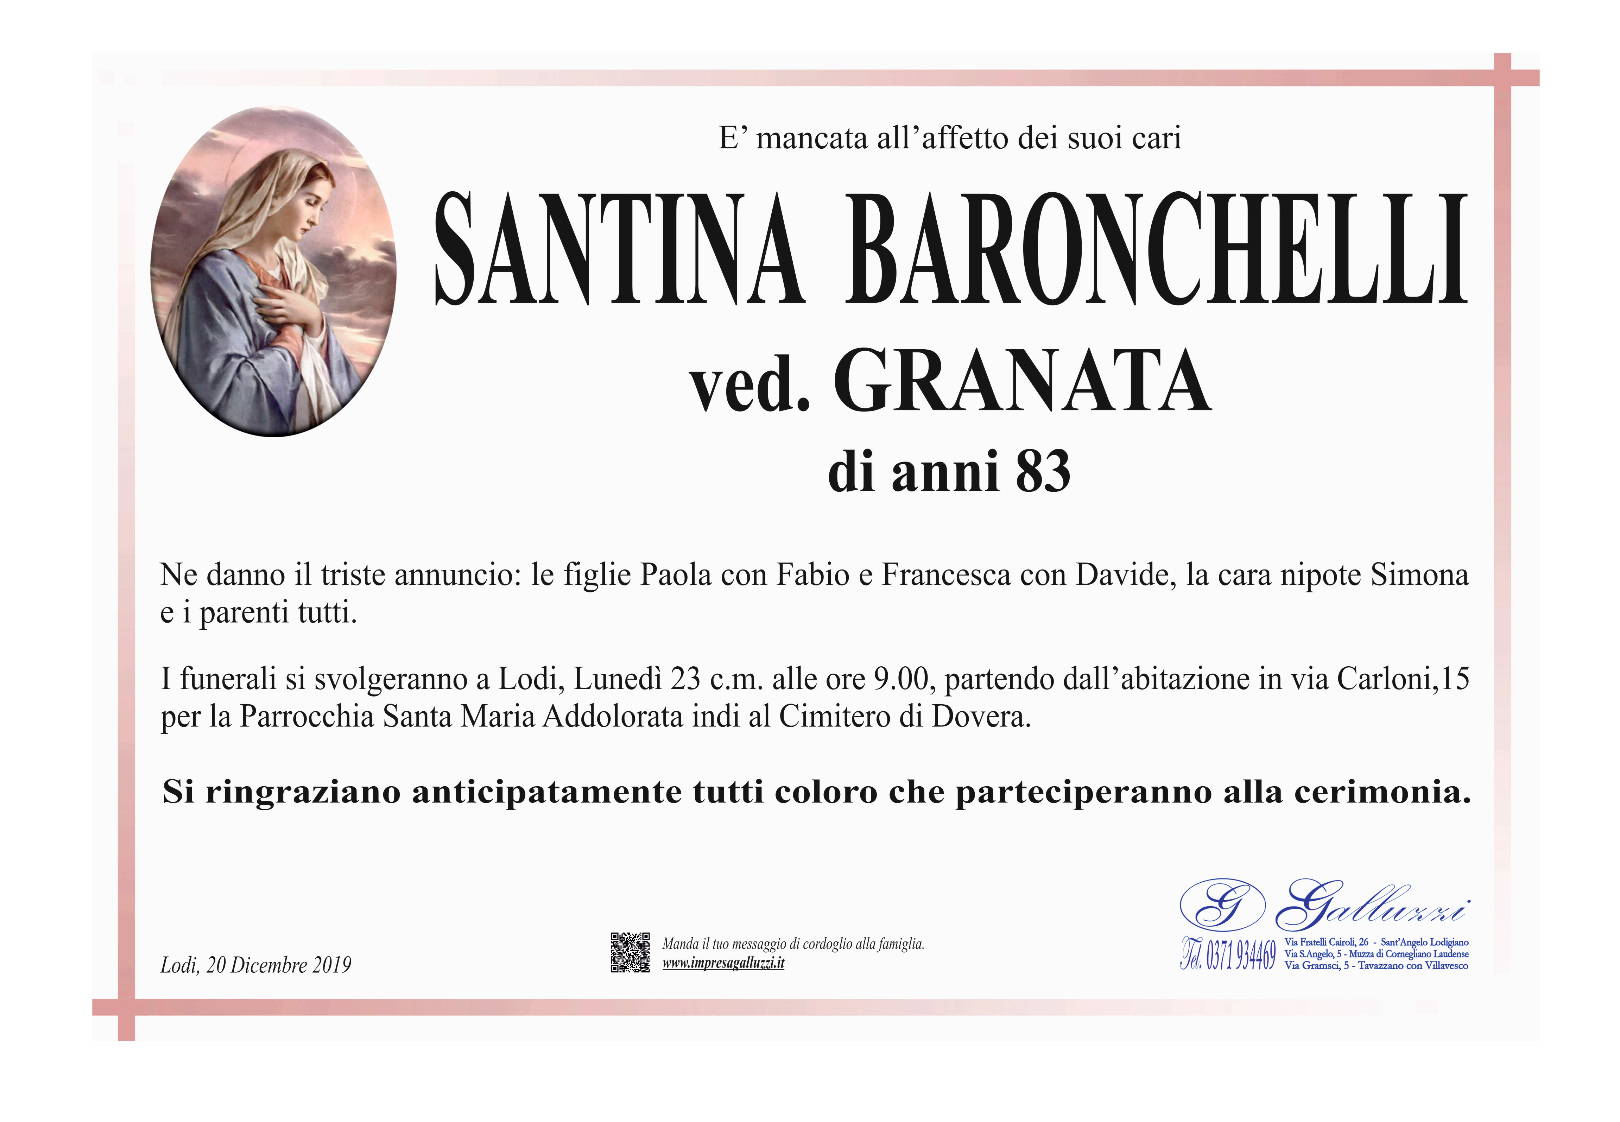 Santina Baronchelli